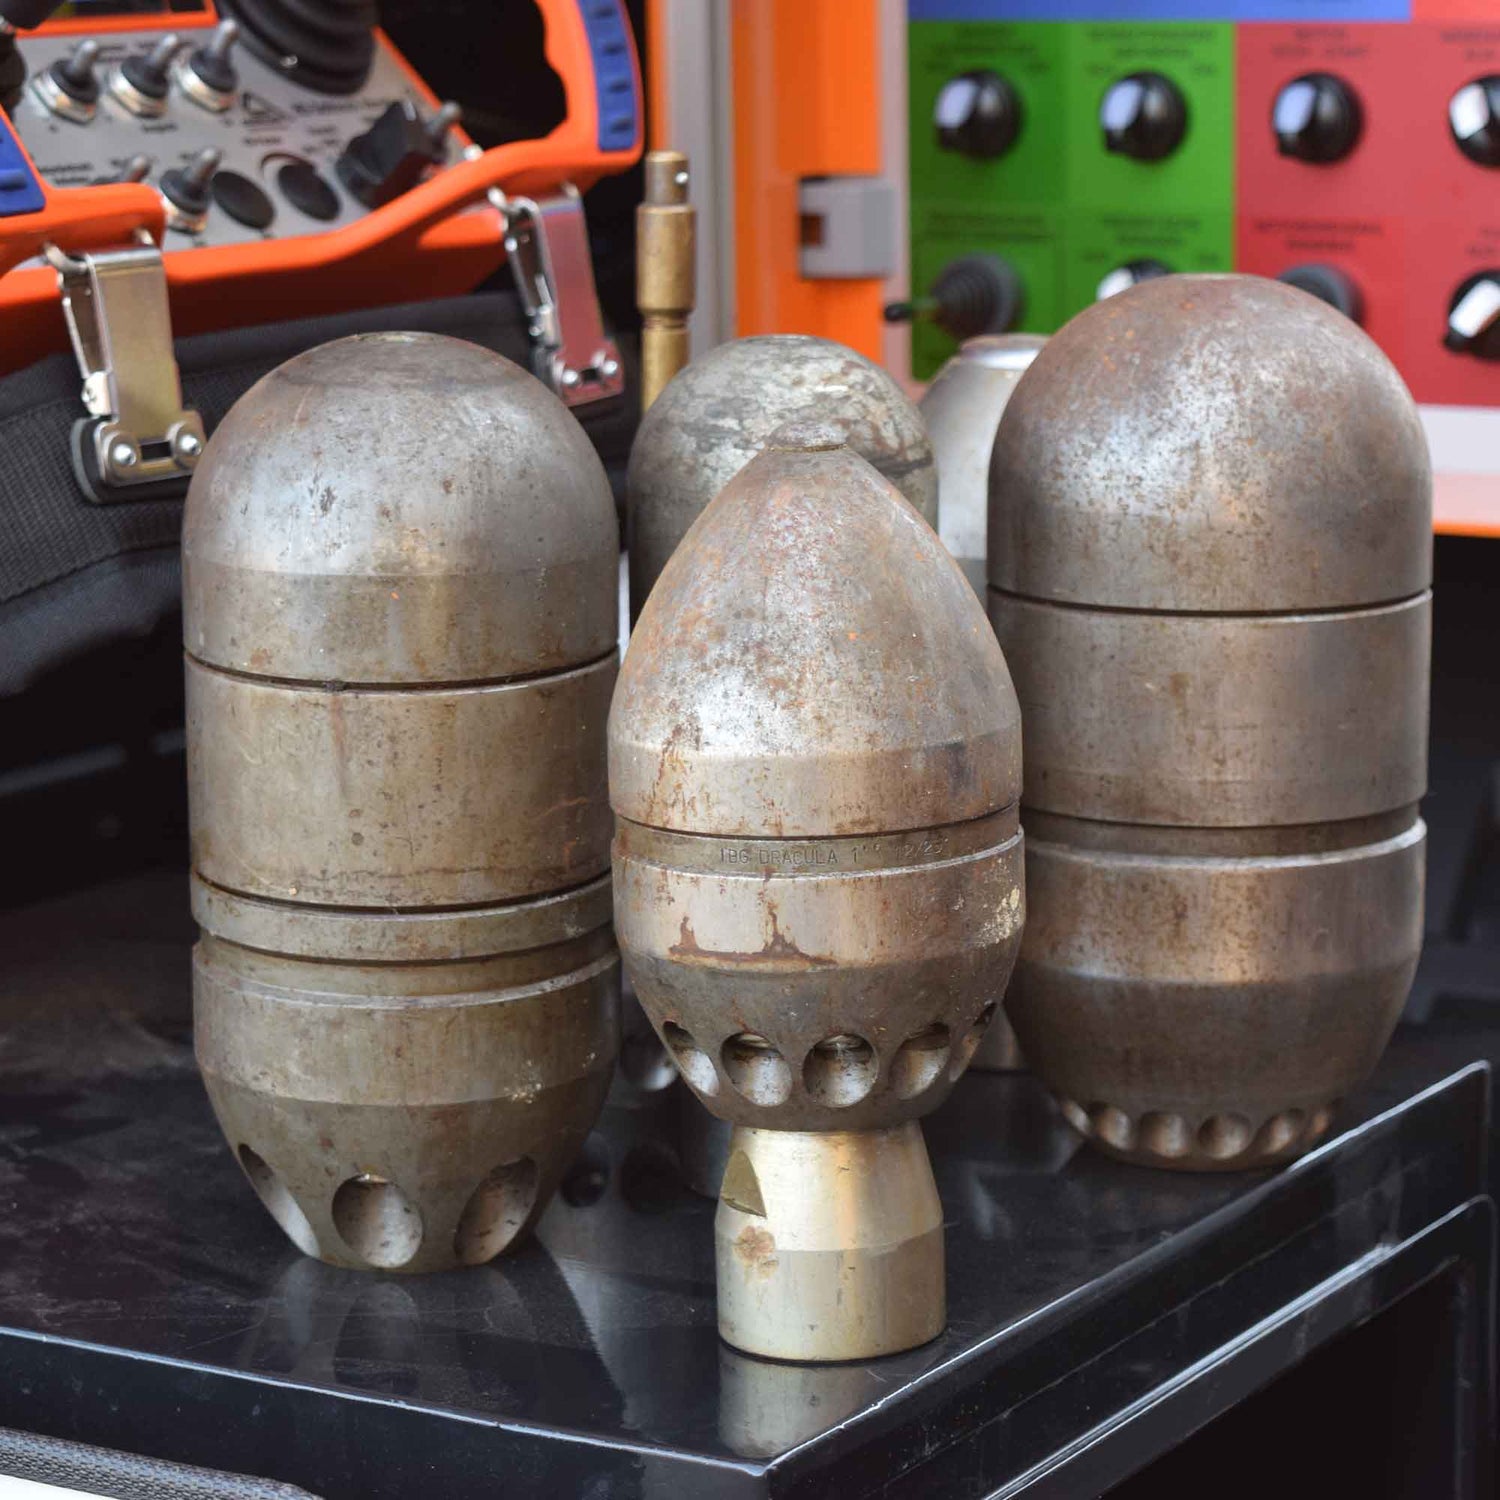 Grenade bomb nozzles